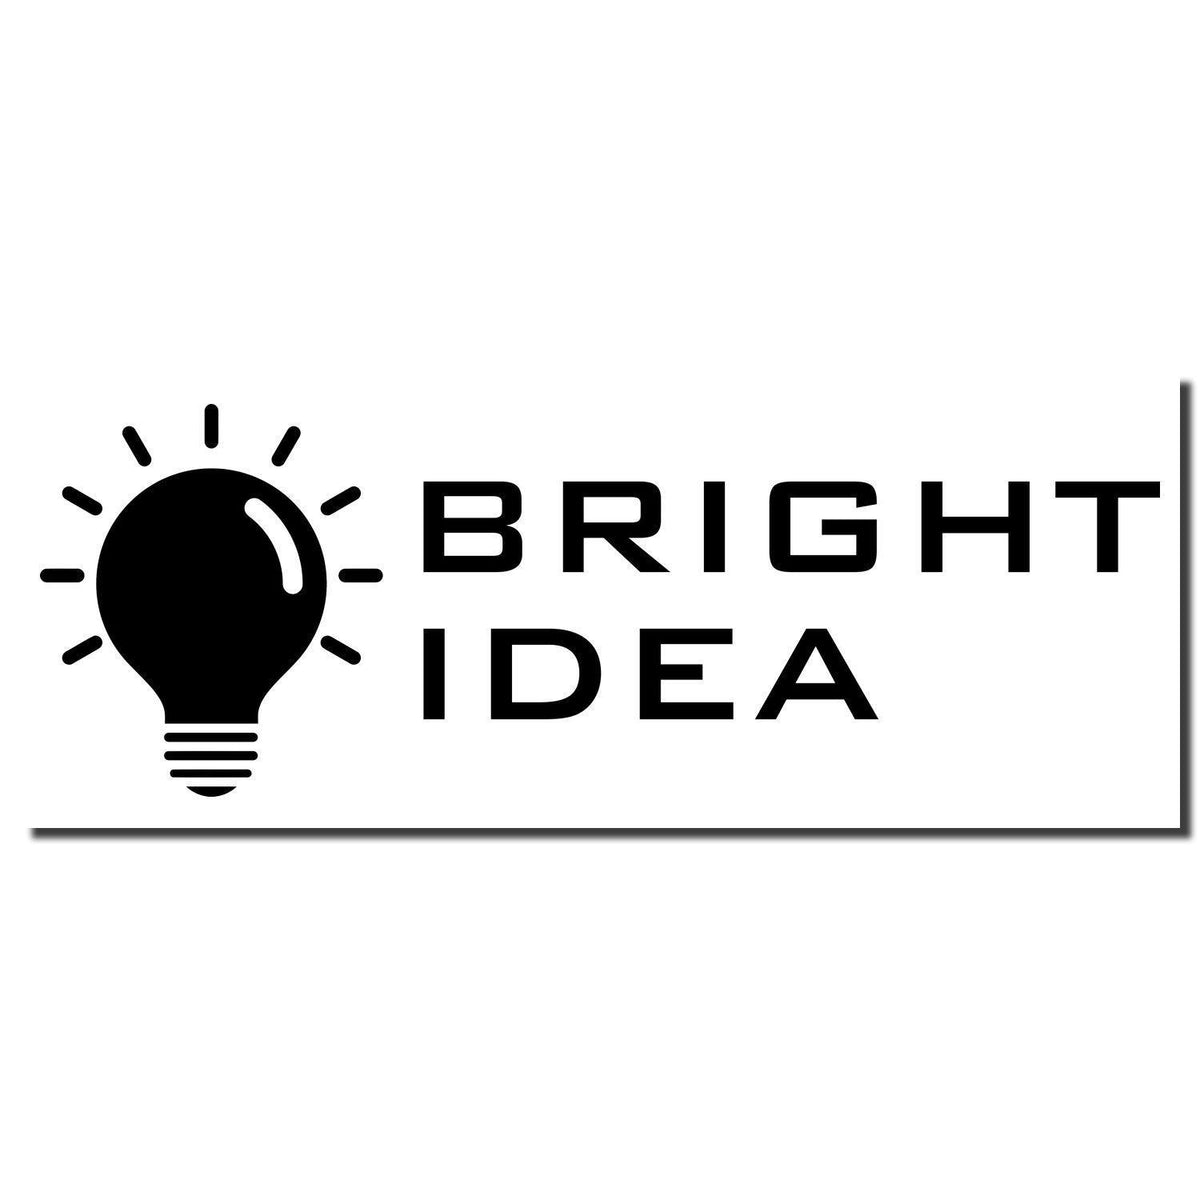 Enlarged Imprint Bright Idea Rubber Stamp Sample